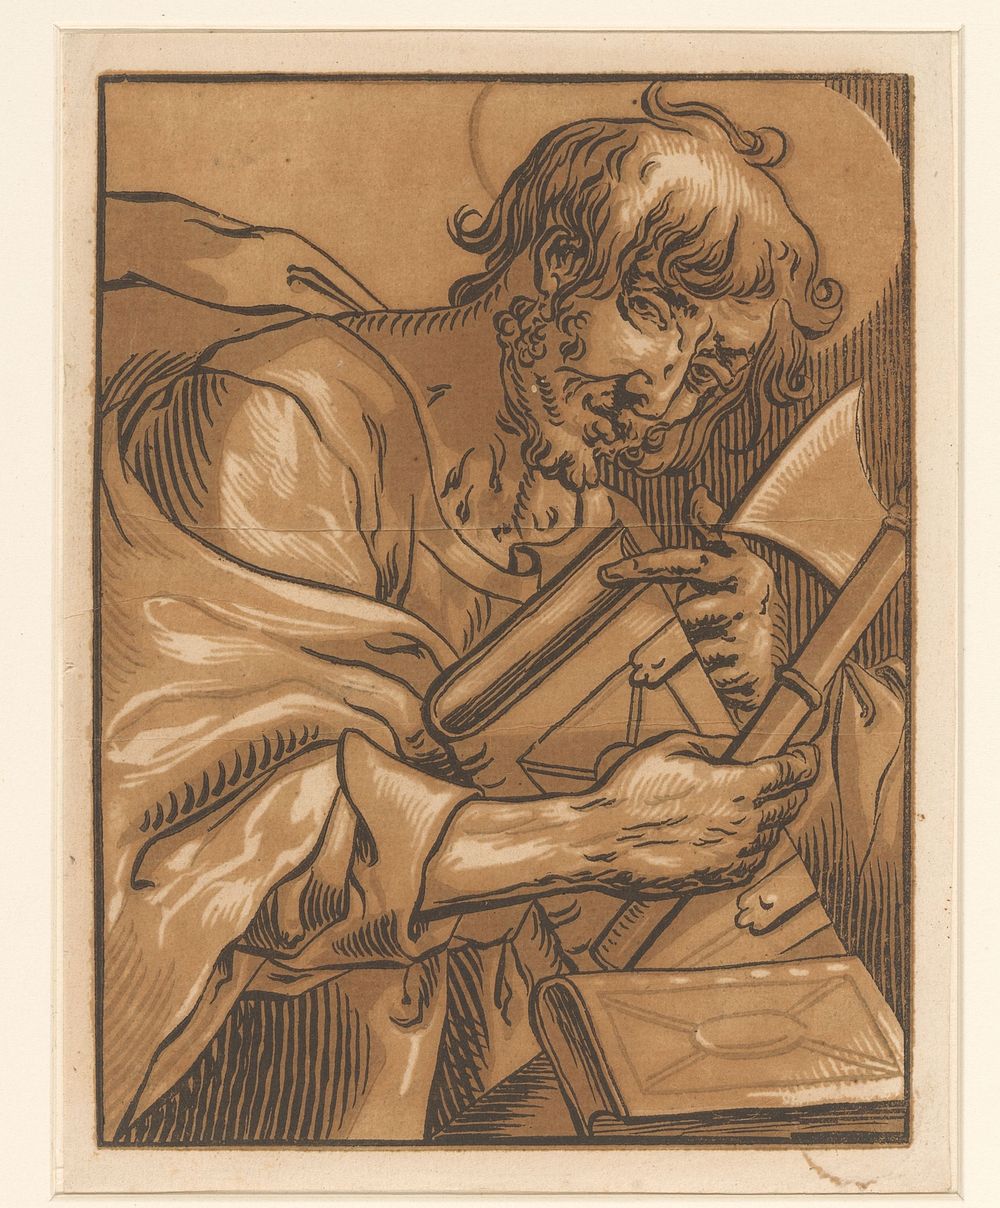 Apostel Mattias (1600 - 1669) by Ludwig Büsinck, Georges Lallemand and Melchior Tavernier